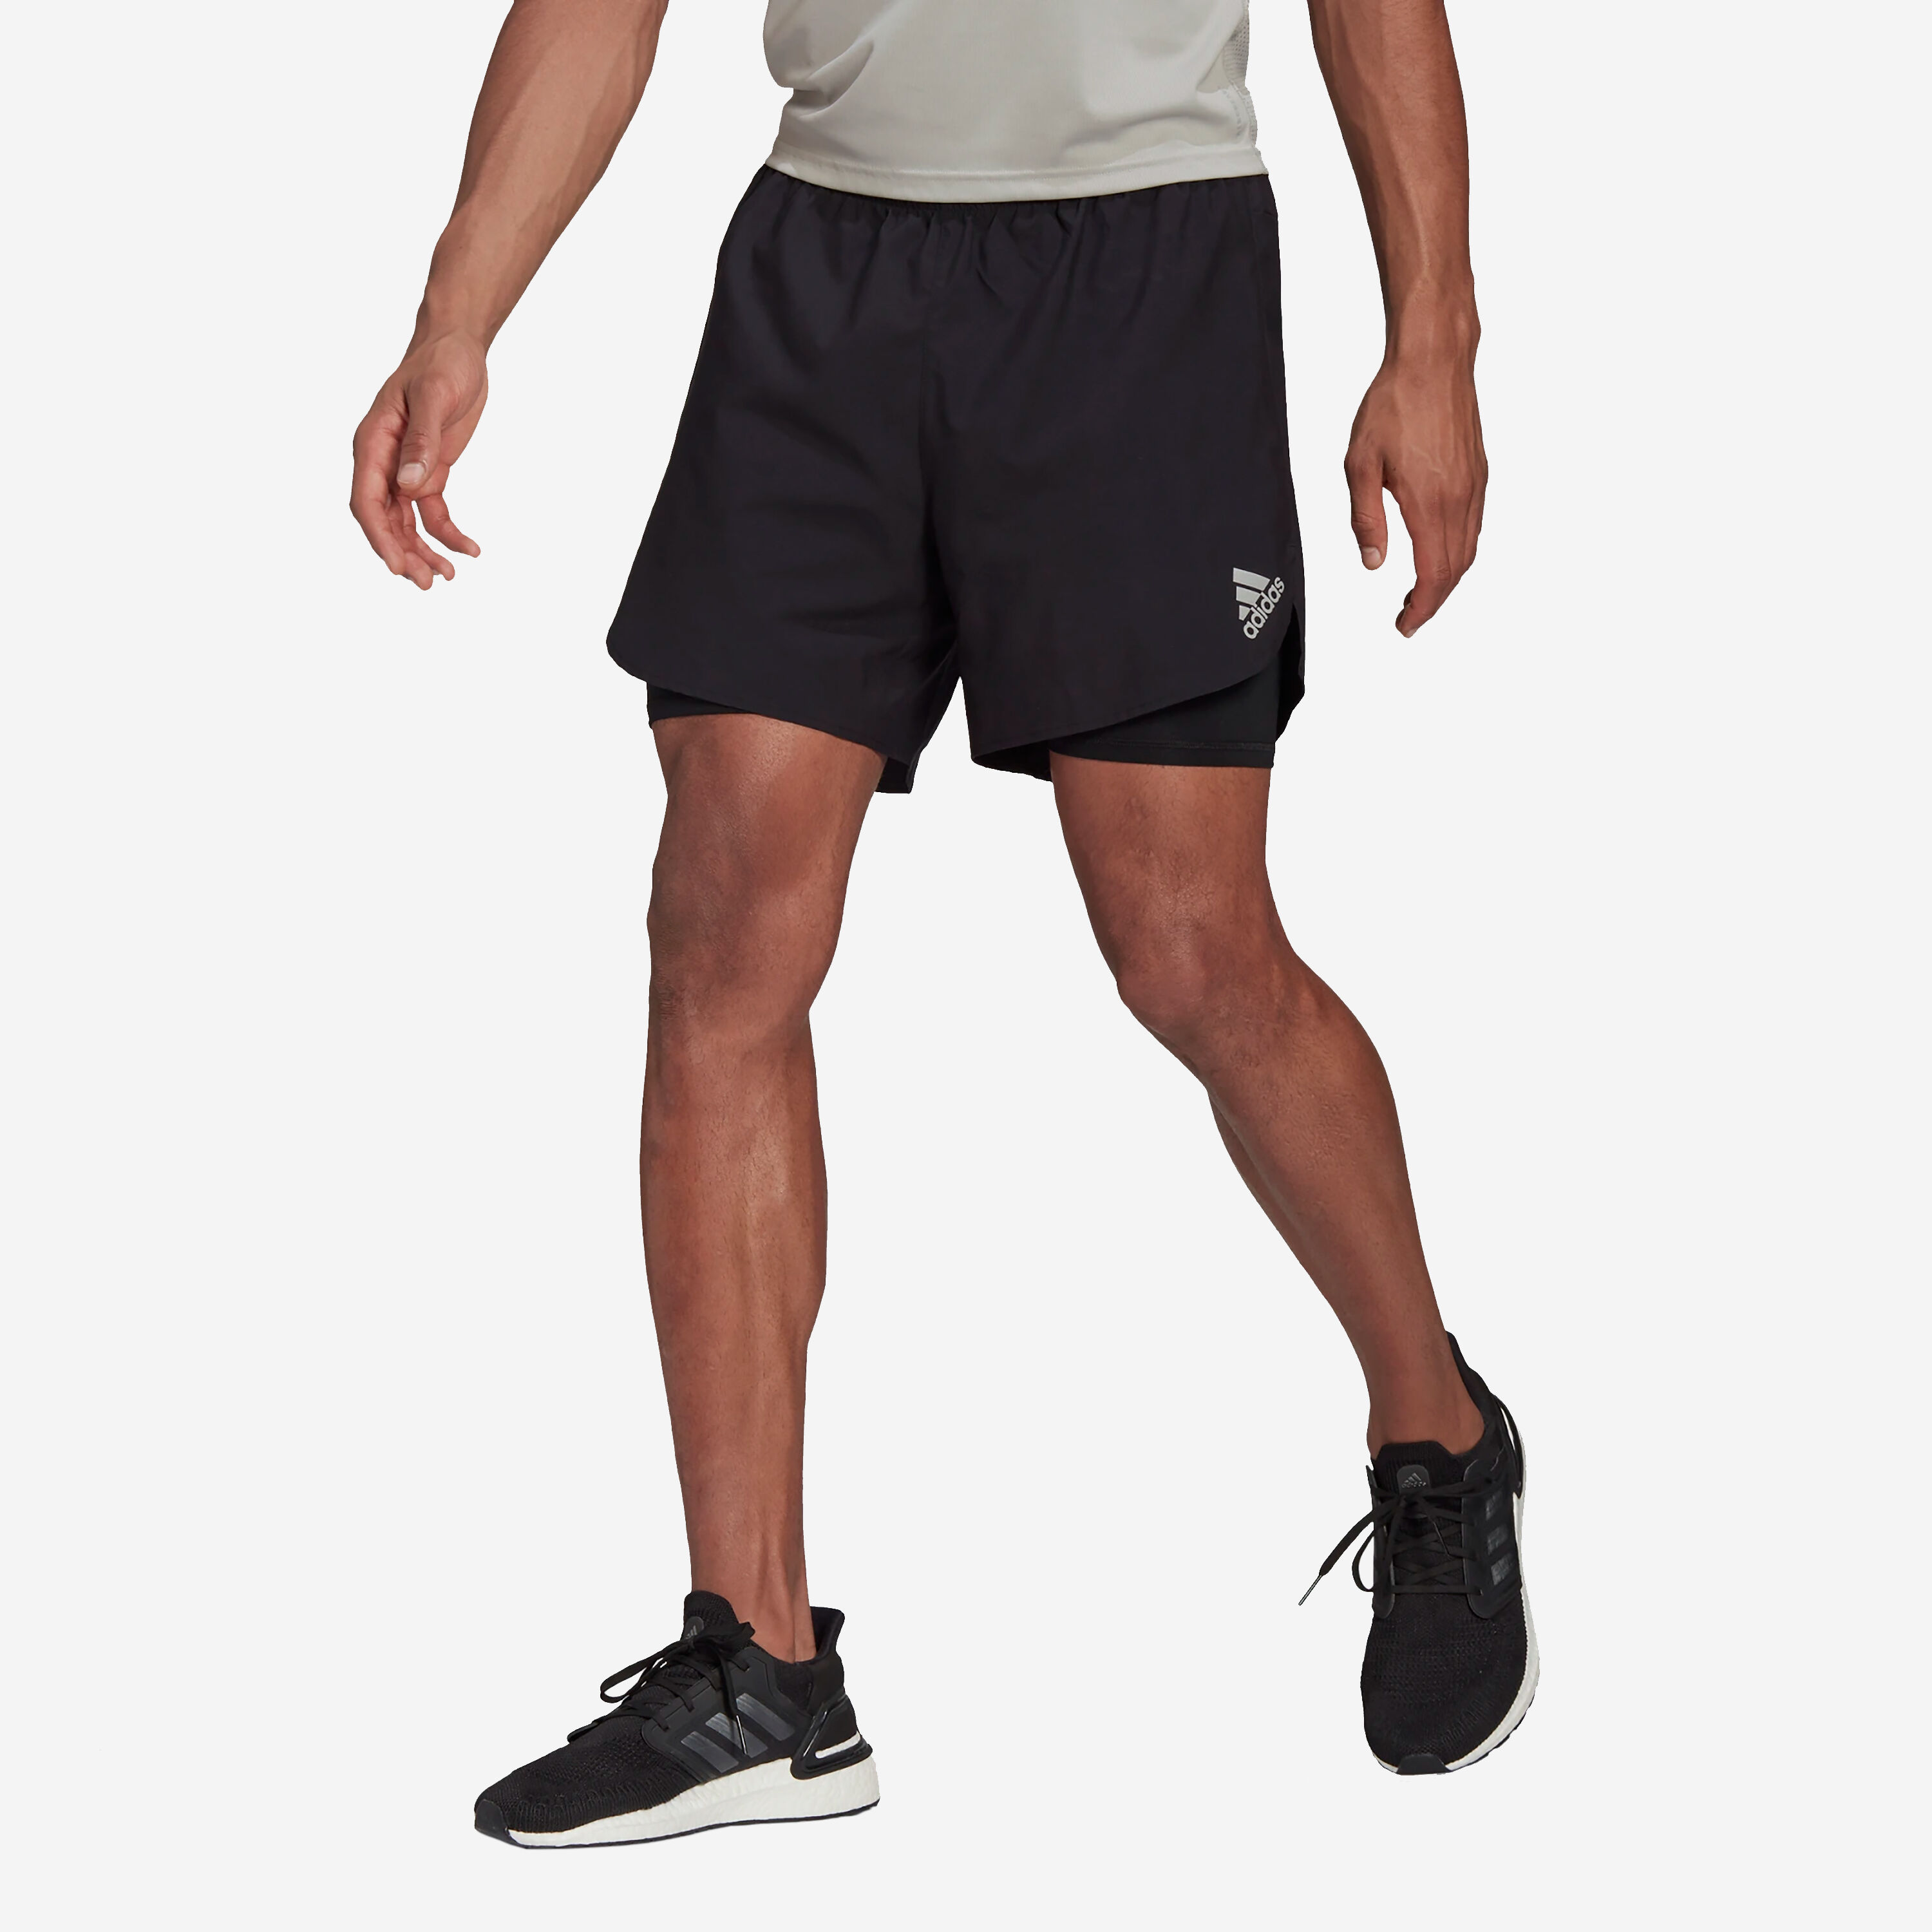 Adidas Fast 2in1 Primeblue shorts RUNKD online running store